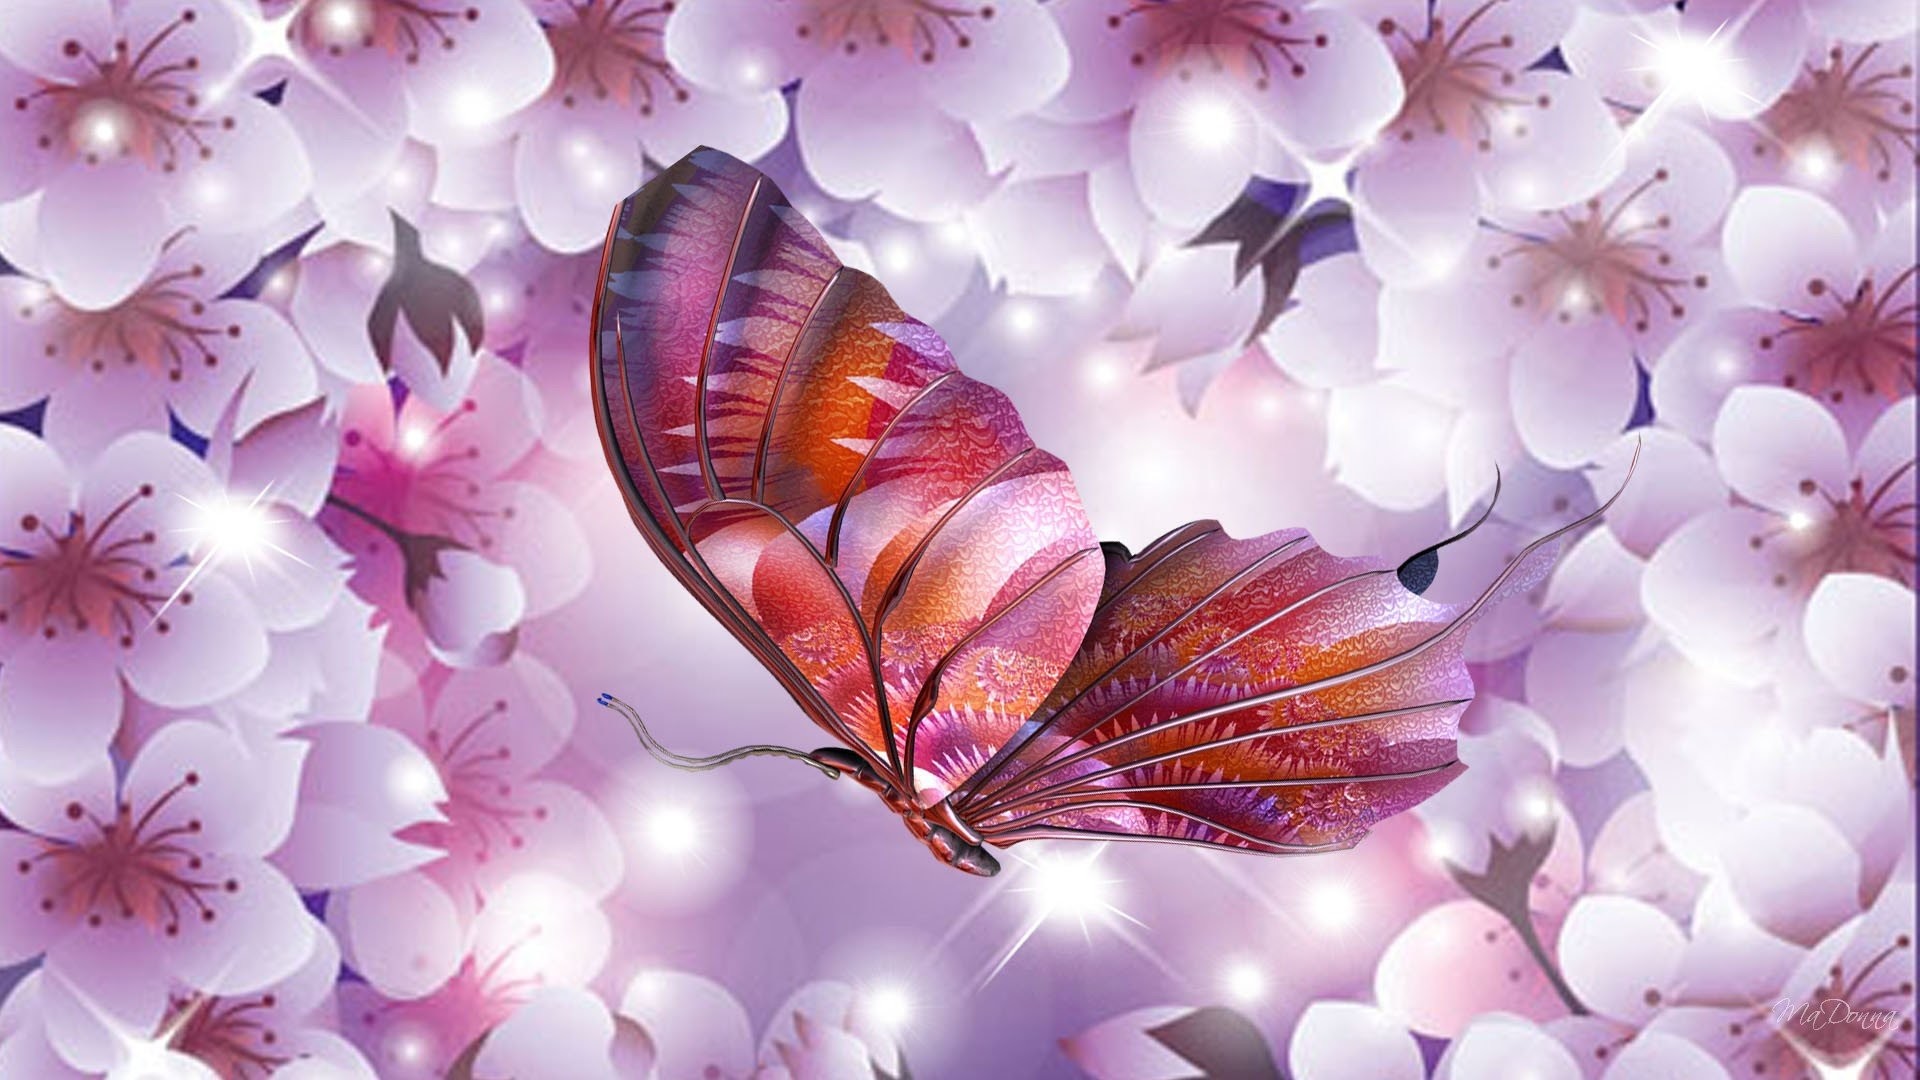 Cherry Blossom Desktop Wallpapers Wallpaper